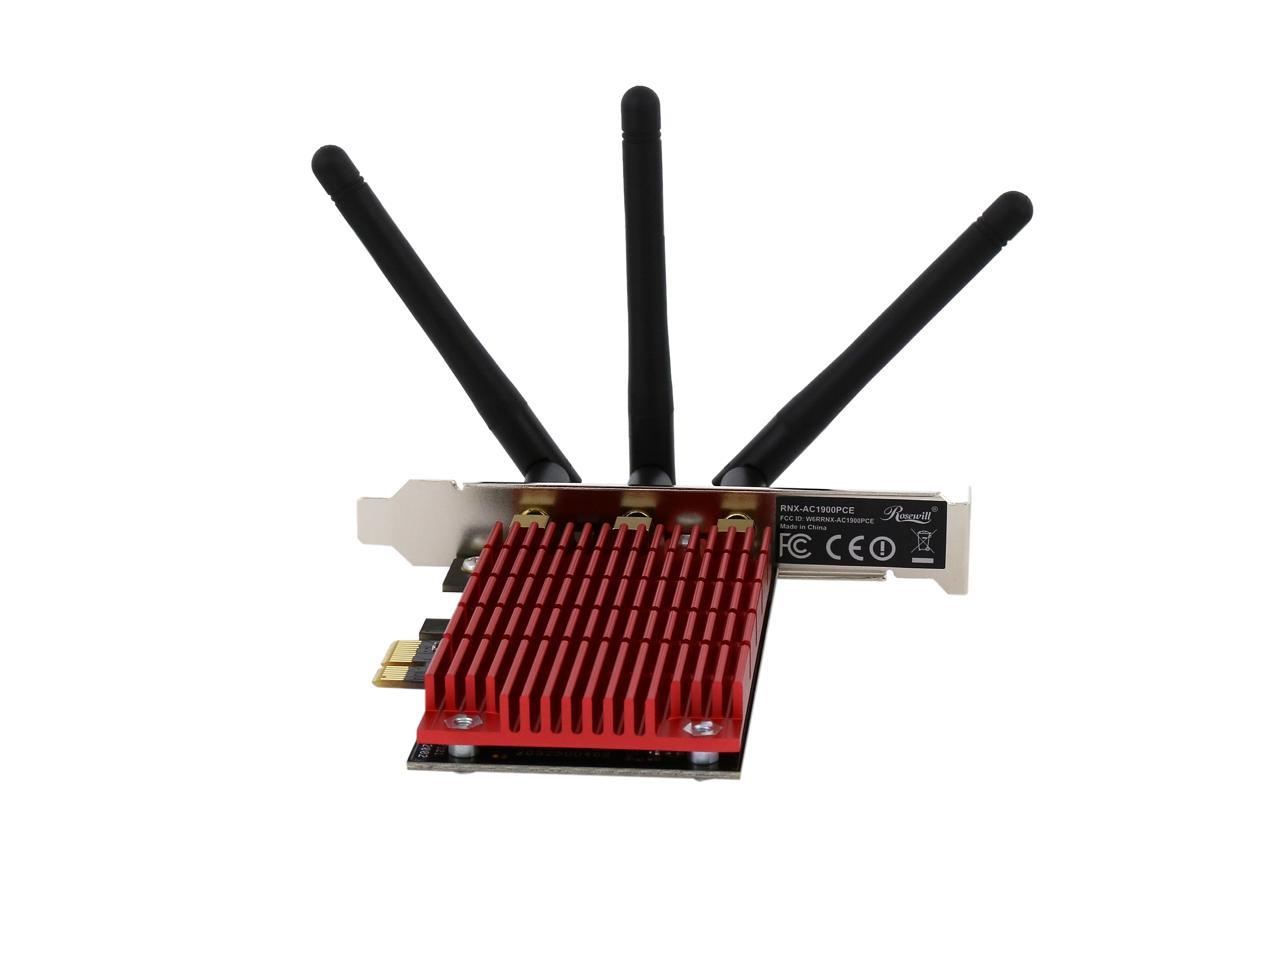 Rosewill RNX-AC1900PCE Dual Band Wireless 11AC PCI Express Wi-Fi Adapter 